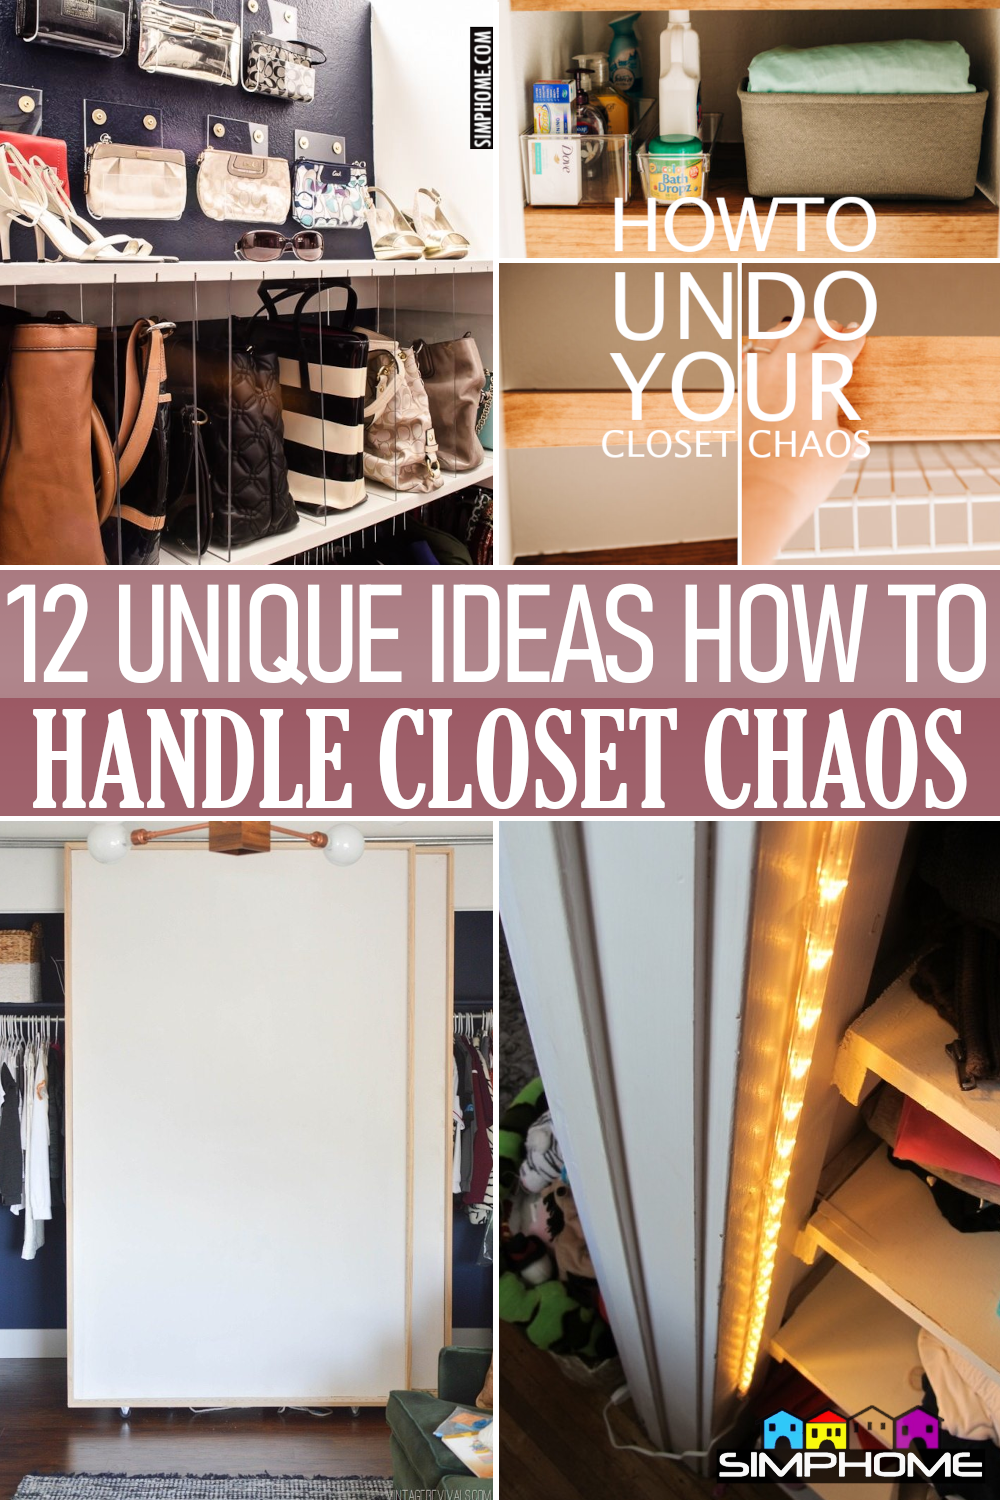 12 Ideas how to Close your closet Chaos via Simphome.comFeatured